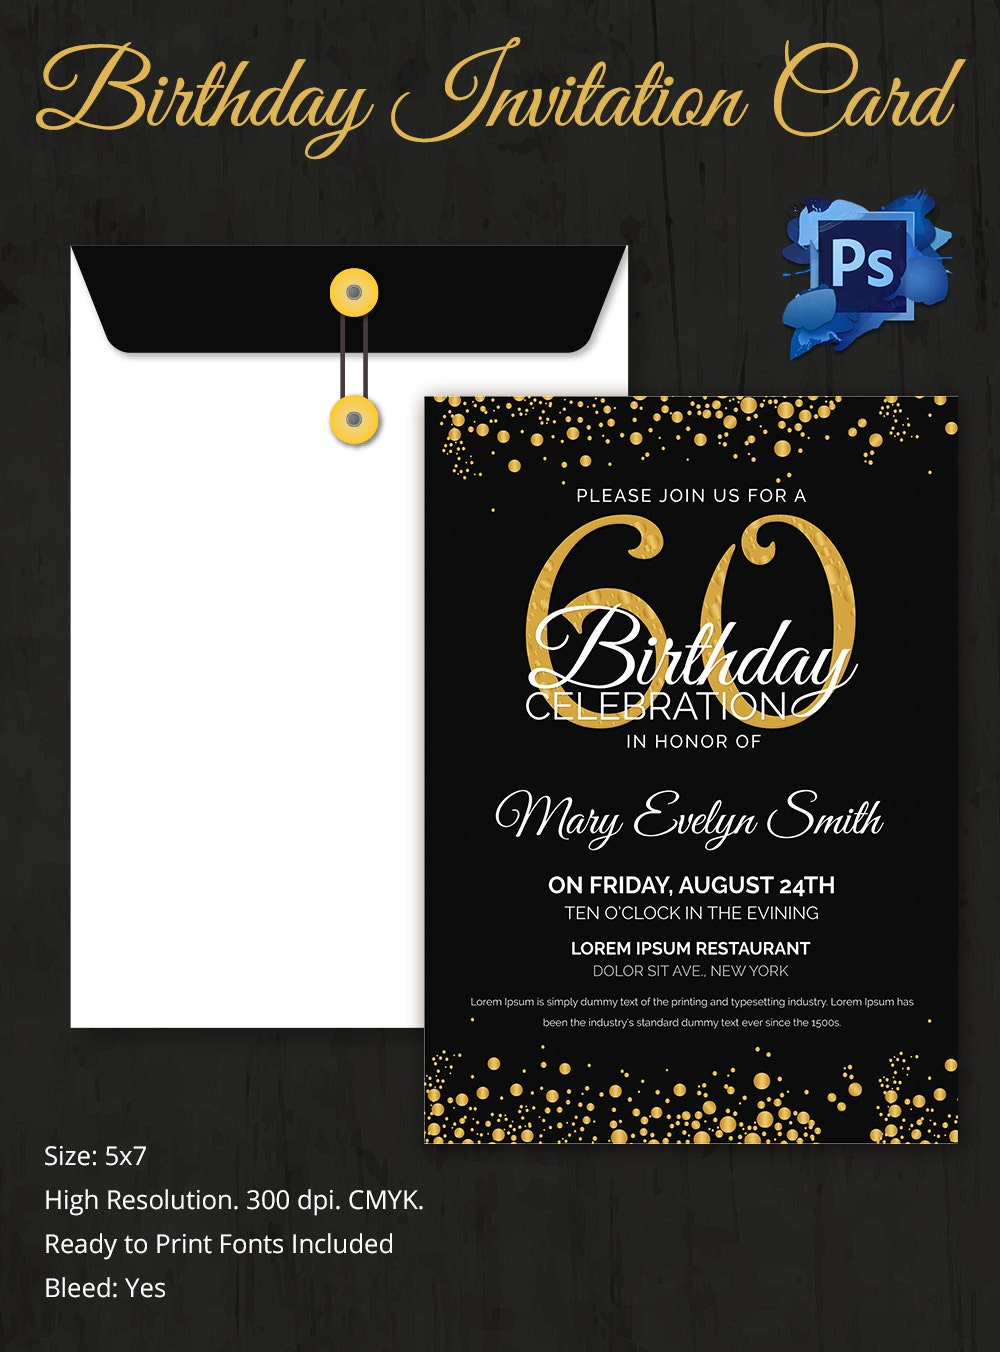 Birthday Invitation Template 32 Free Word PDF PSD AI 